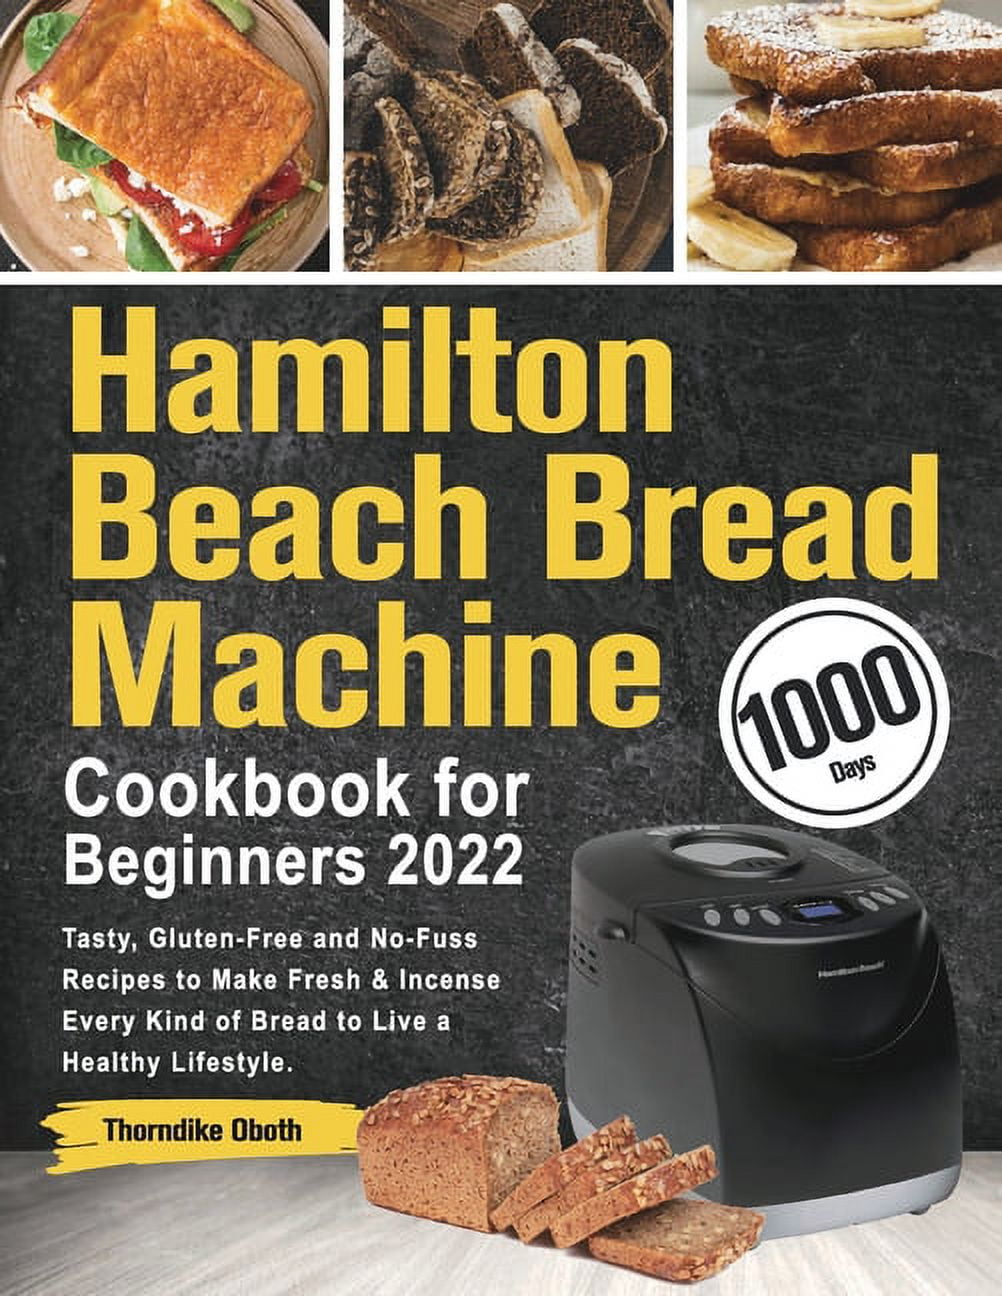 Buy The Basic Hamilton Beach Bread Machine Cookbook: The Healthy